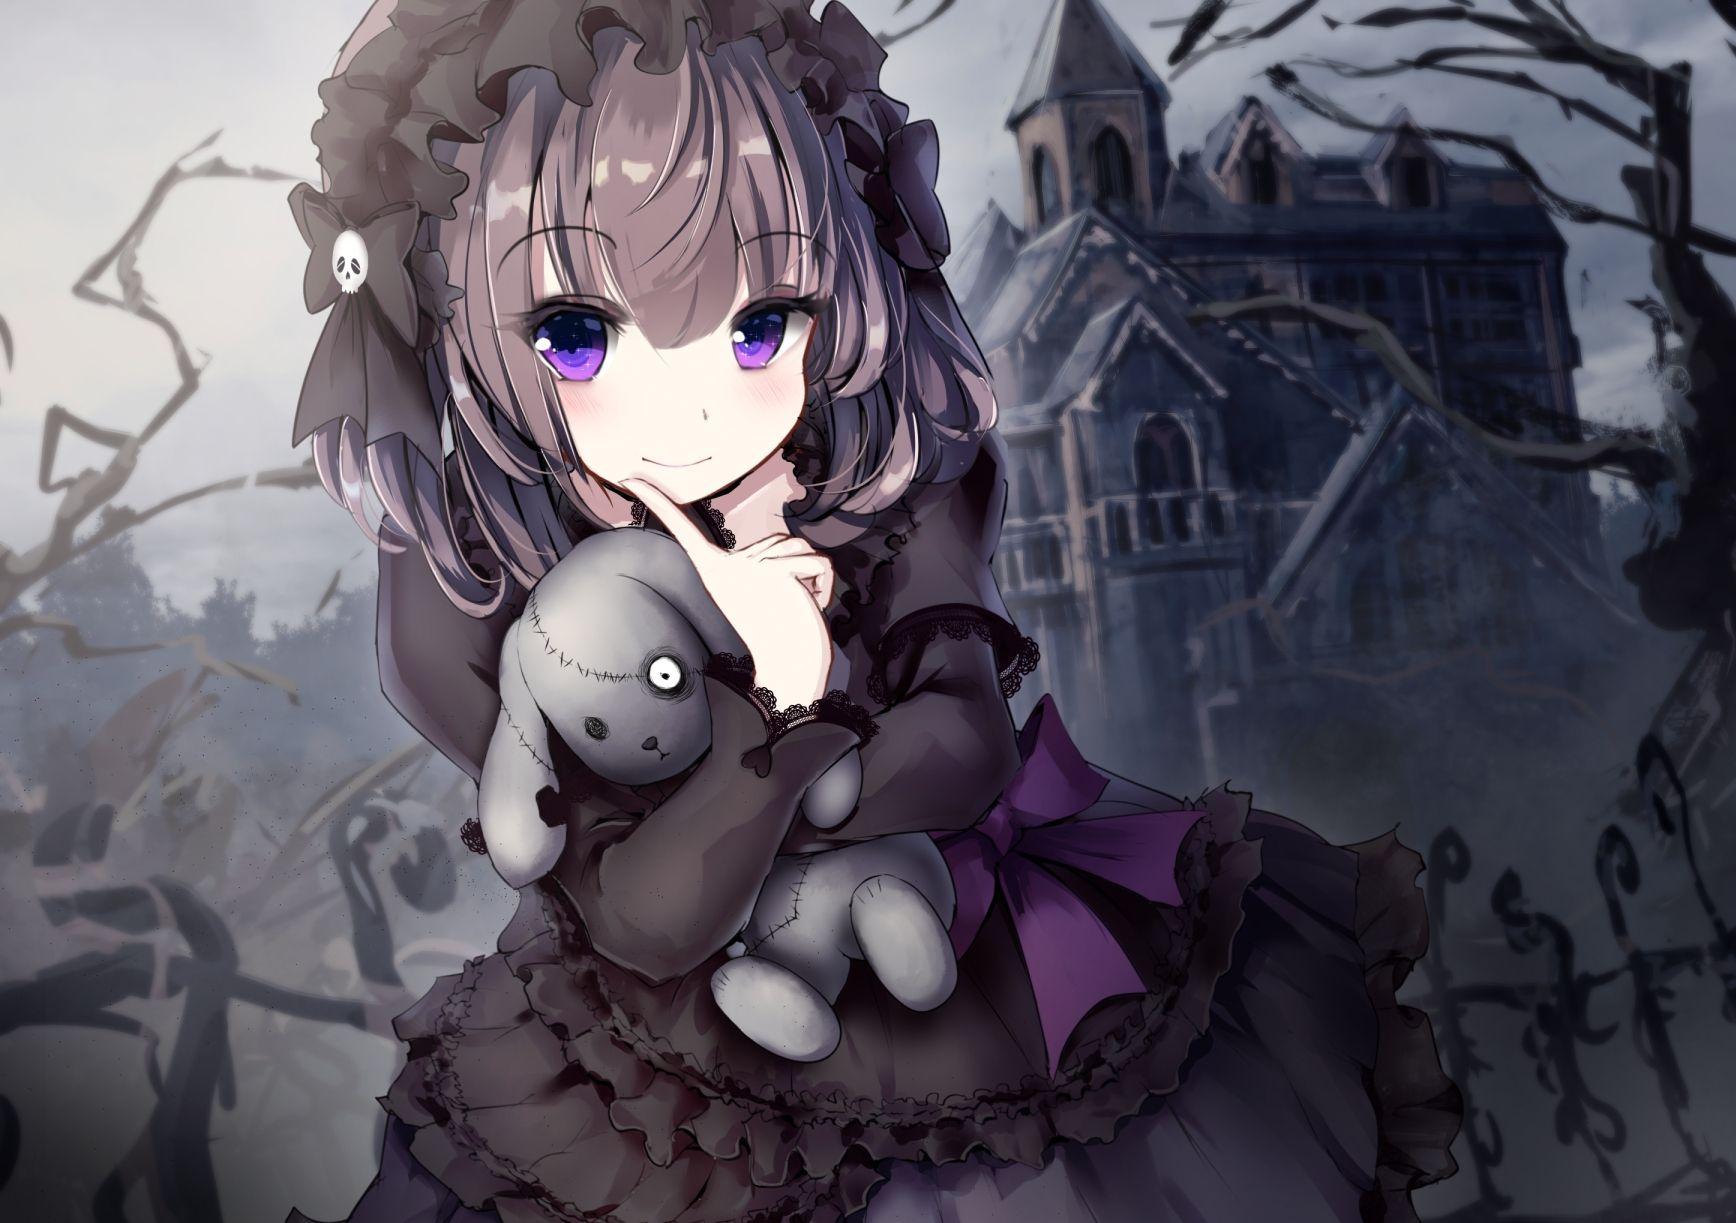 ArtStation  Gothic Anime Girl4KCharacter Reference Images